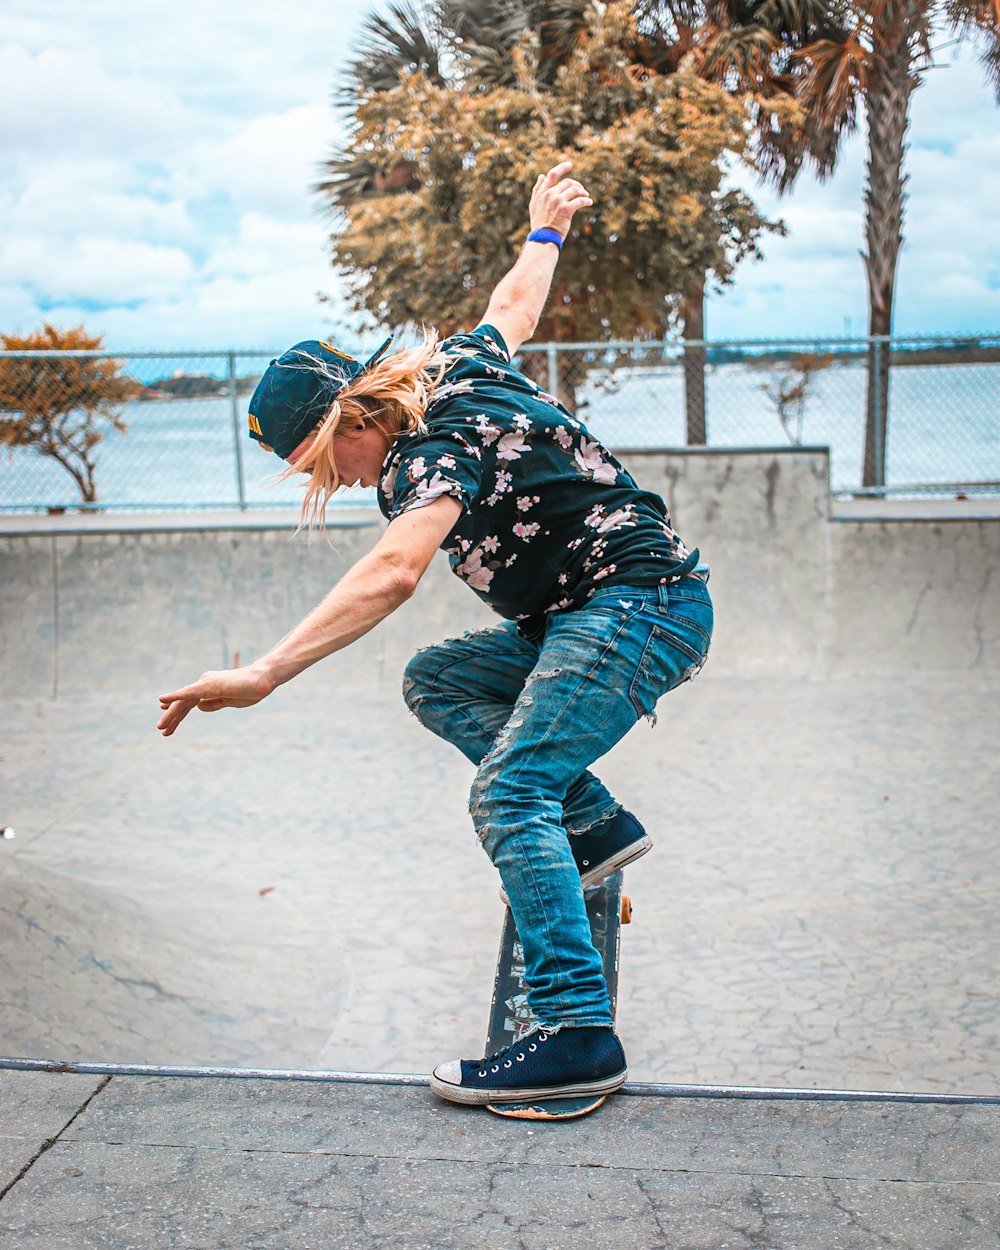 Skateboarder macht Stunts